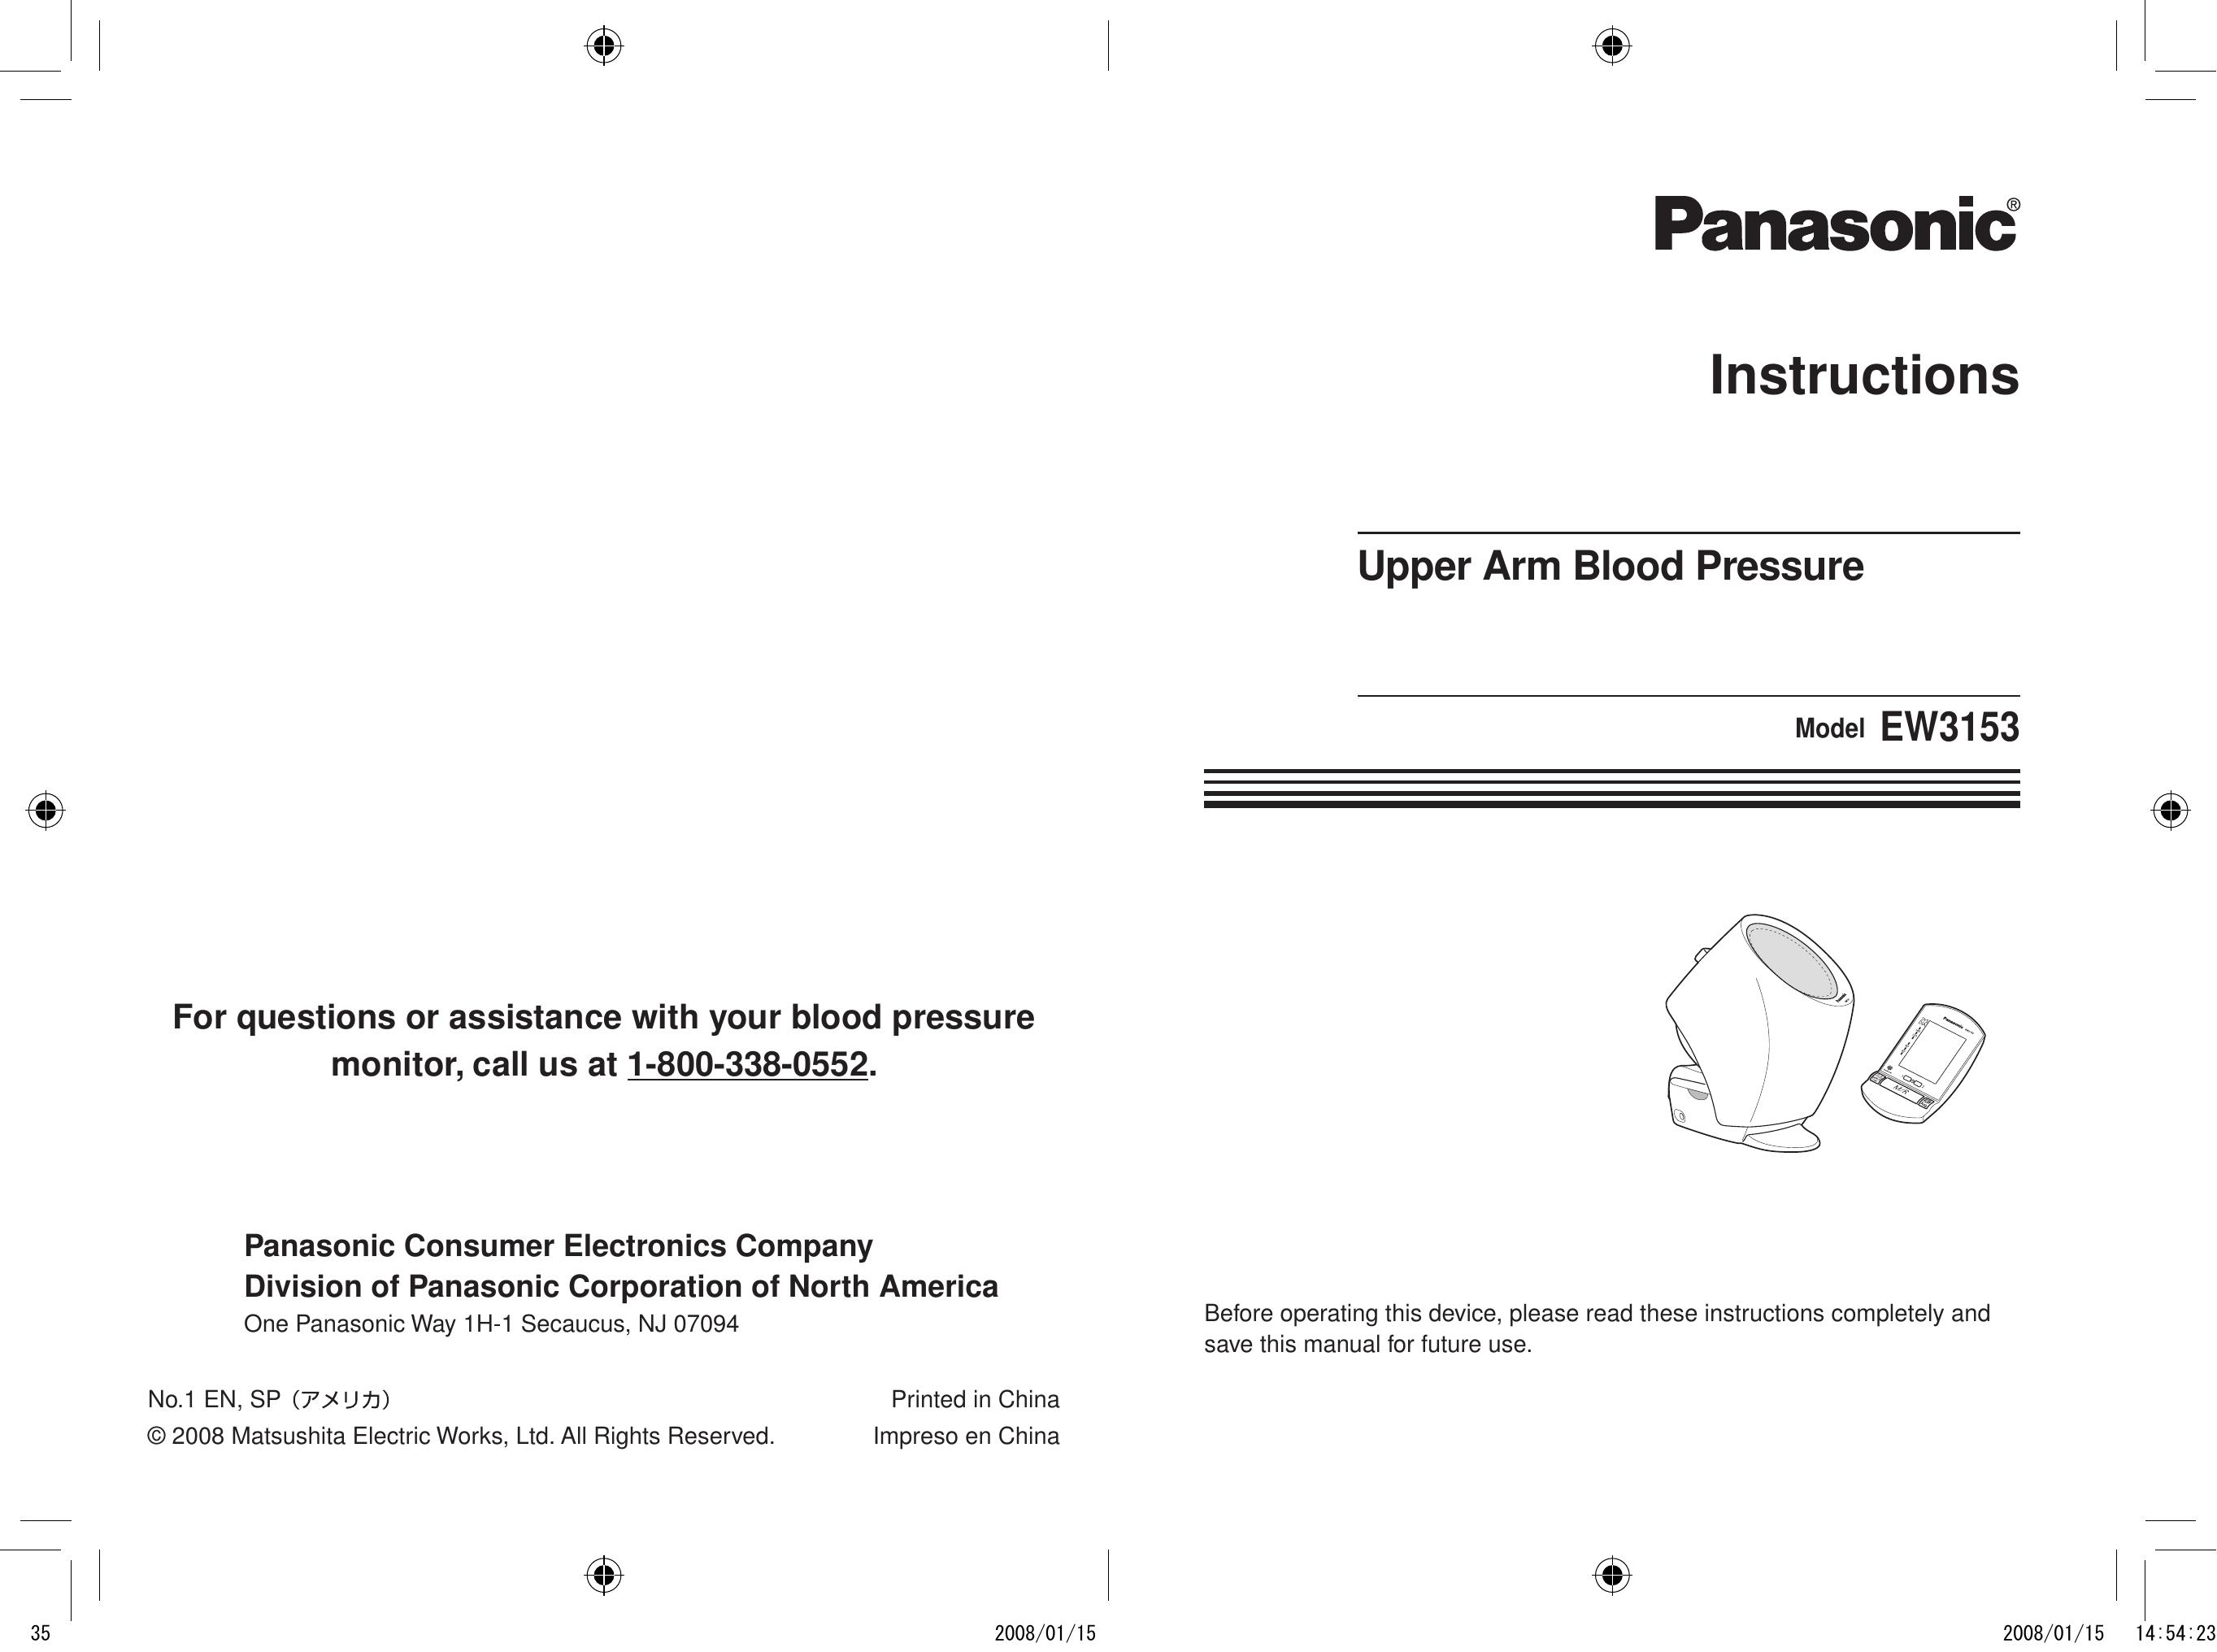 Panasonic EW3153 Blood Pressure Monitor User Manual